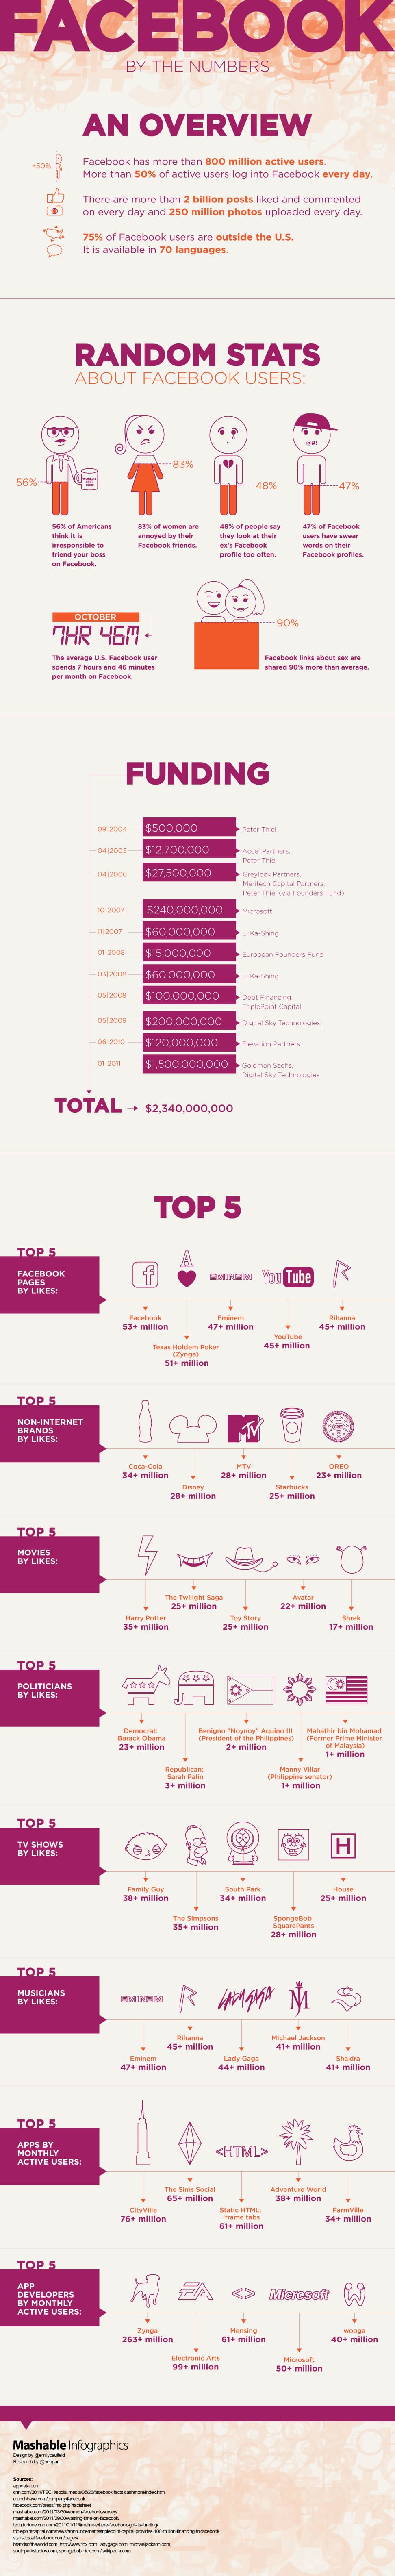 Mashable Facebook Infographic